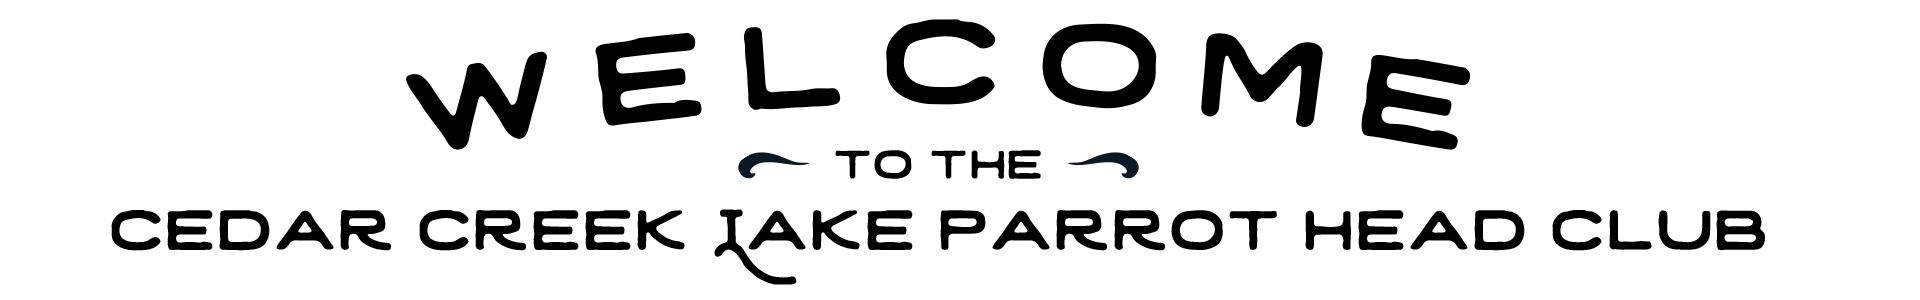 Welcome to the cedar creek lake parrot head club